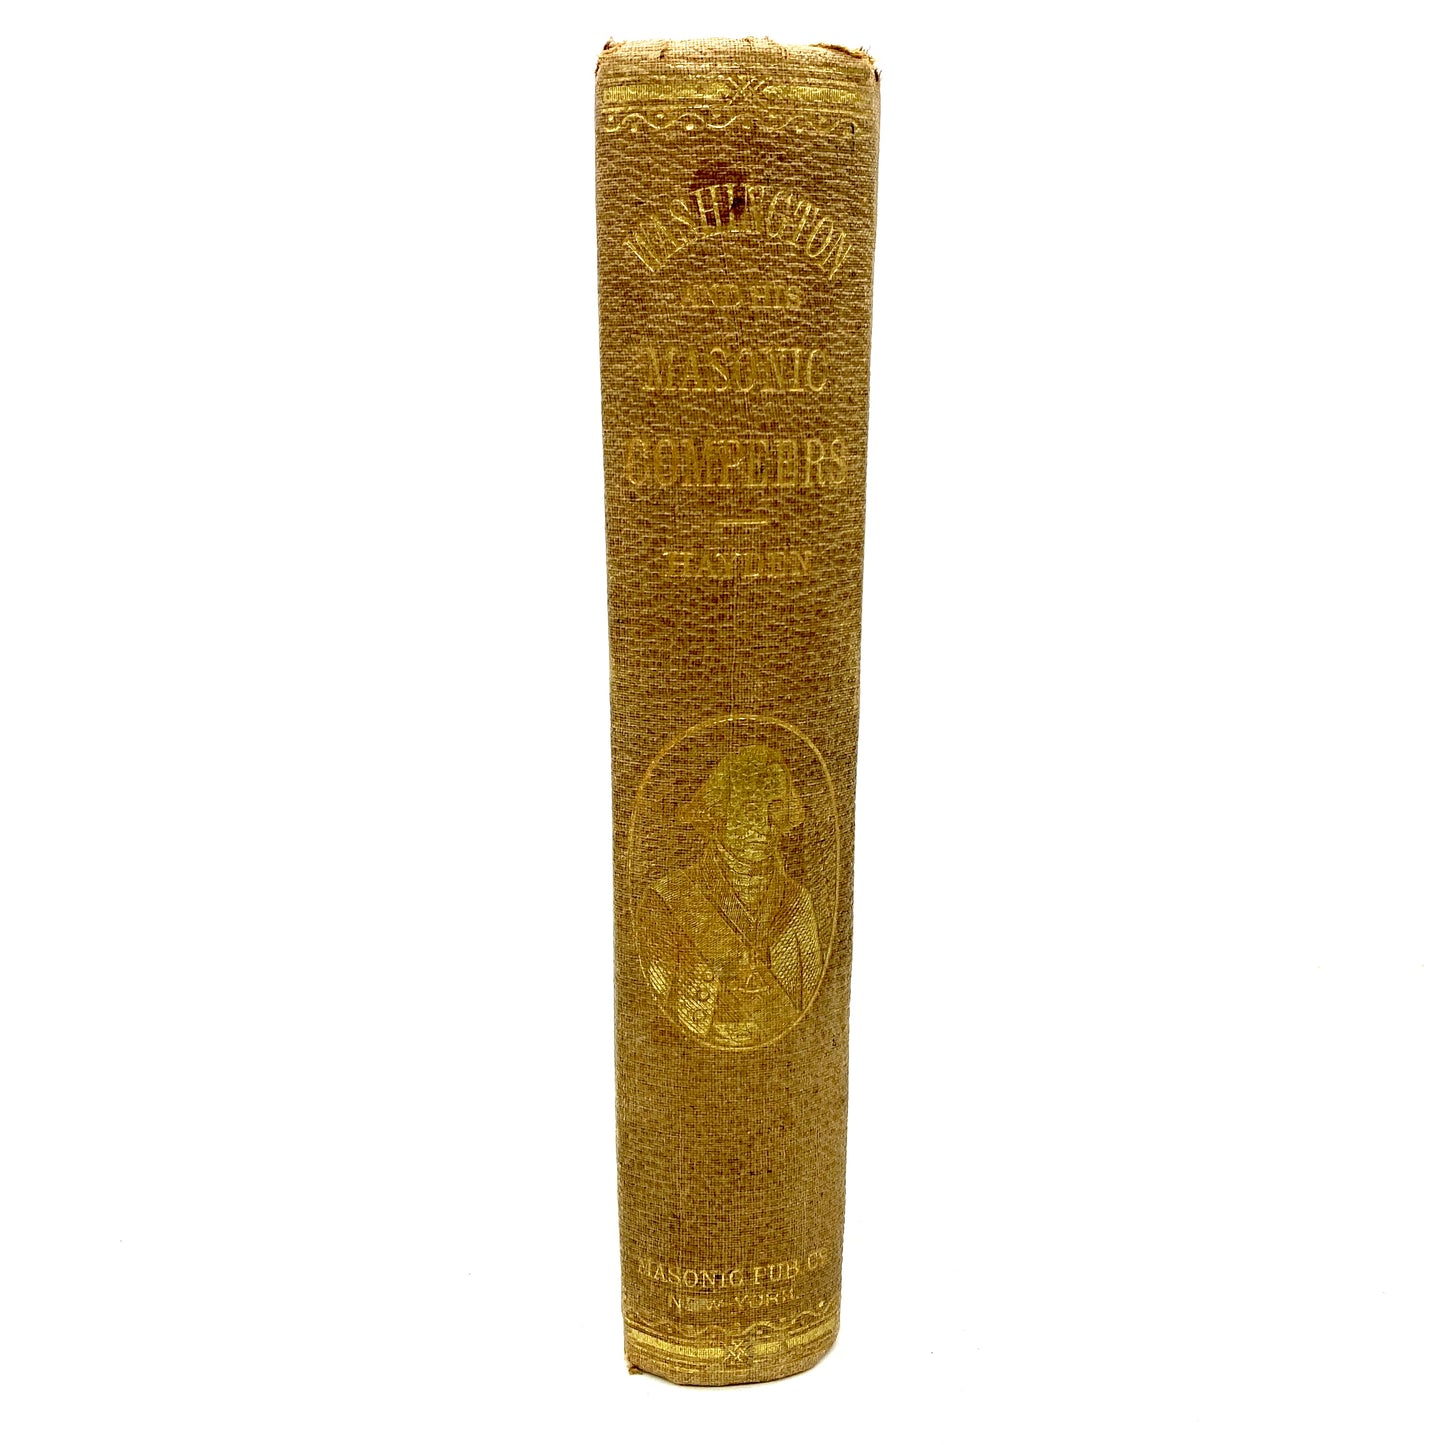 HAYDEN, Sidney "Washington and His Masonic Compeers" [Masonic Publishing, c1866]